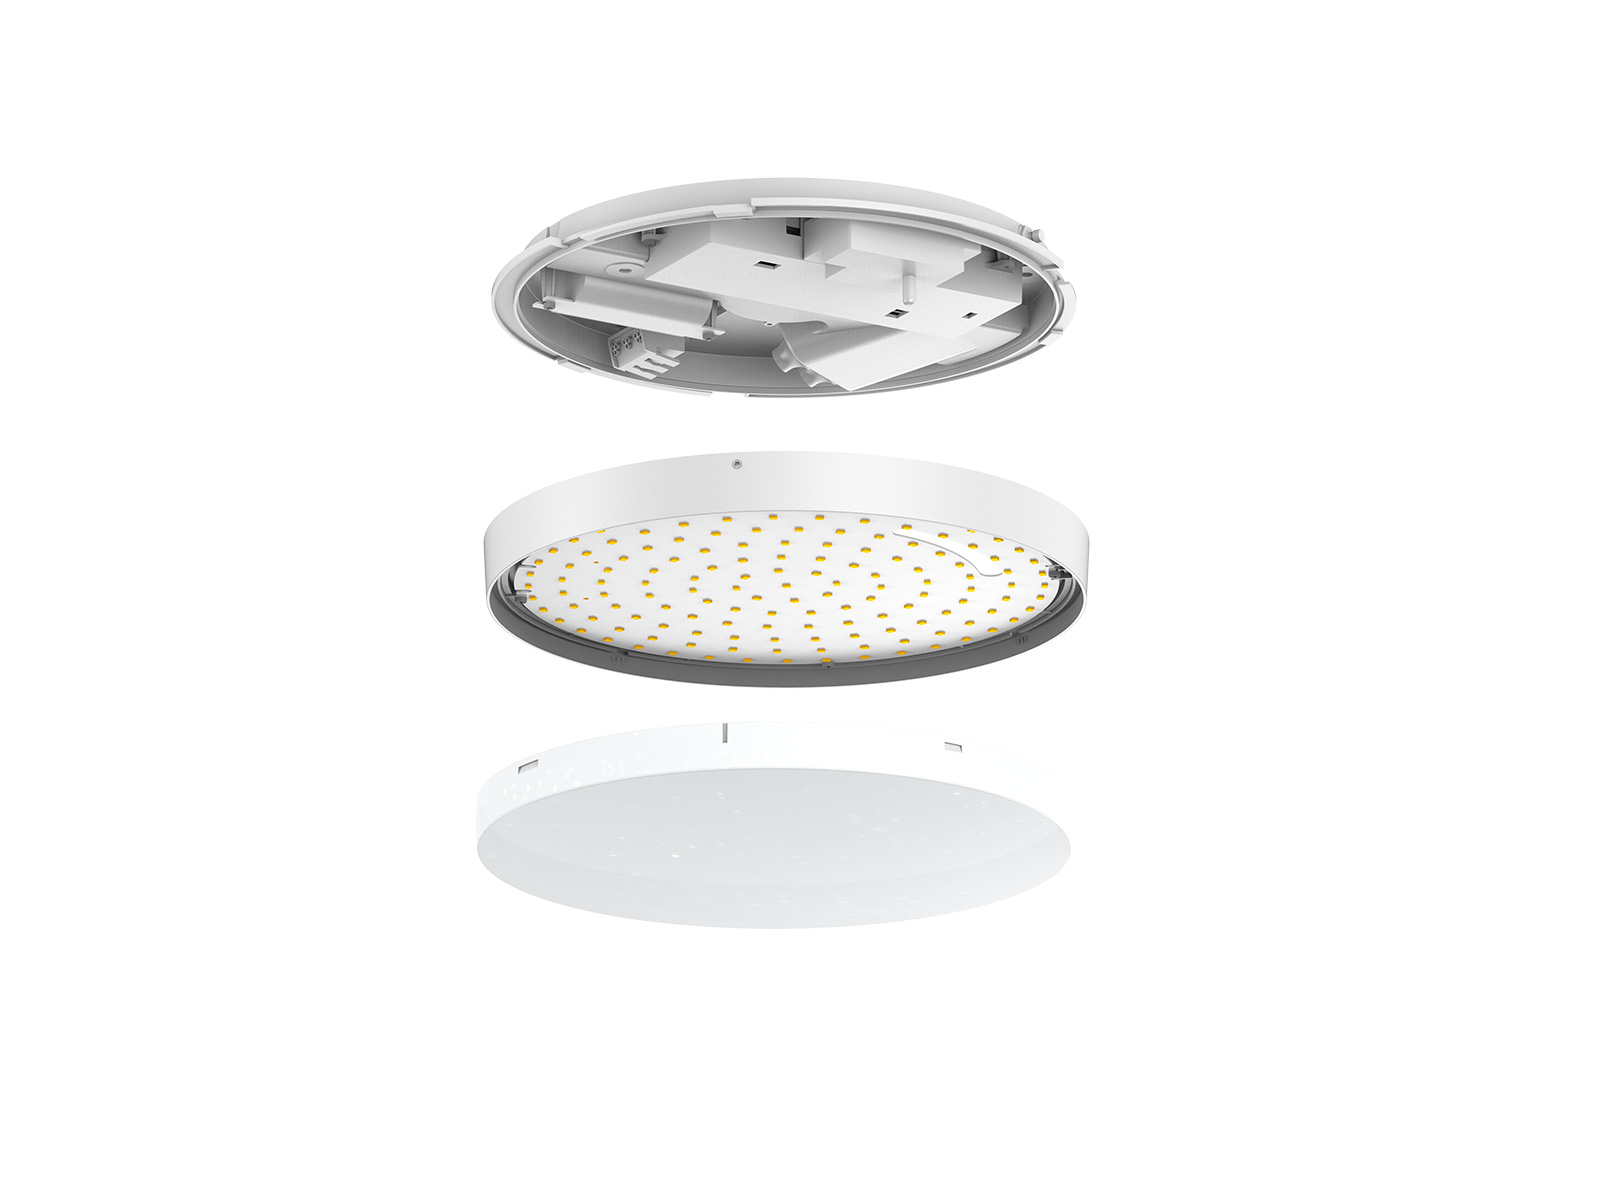 AL87 best flush mount kitchen ceiling light